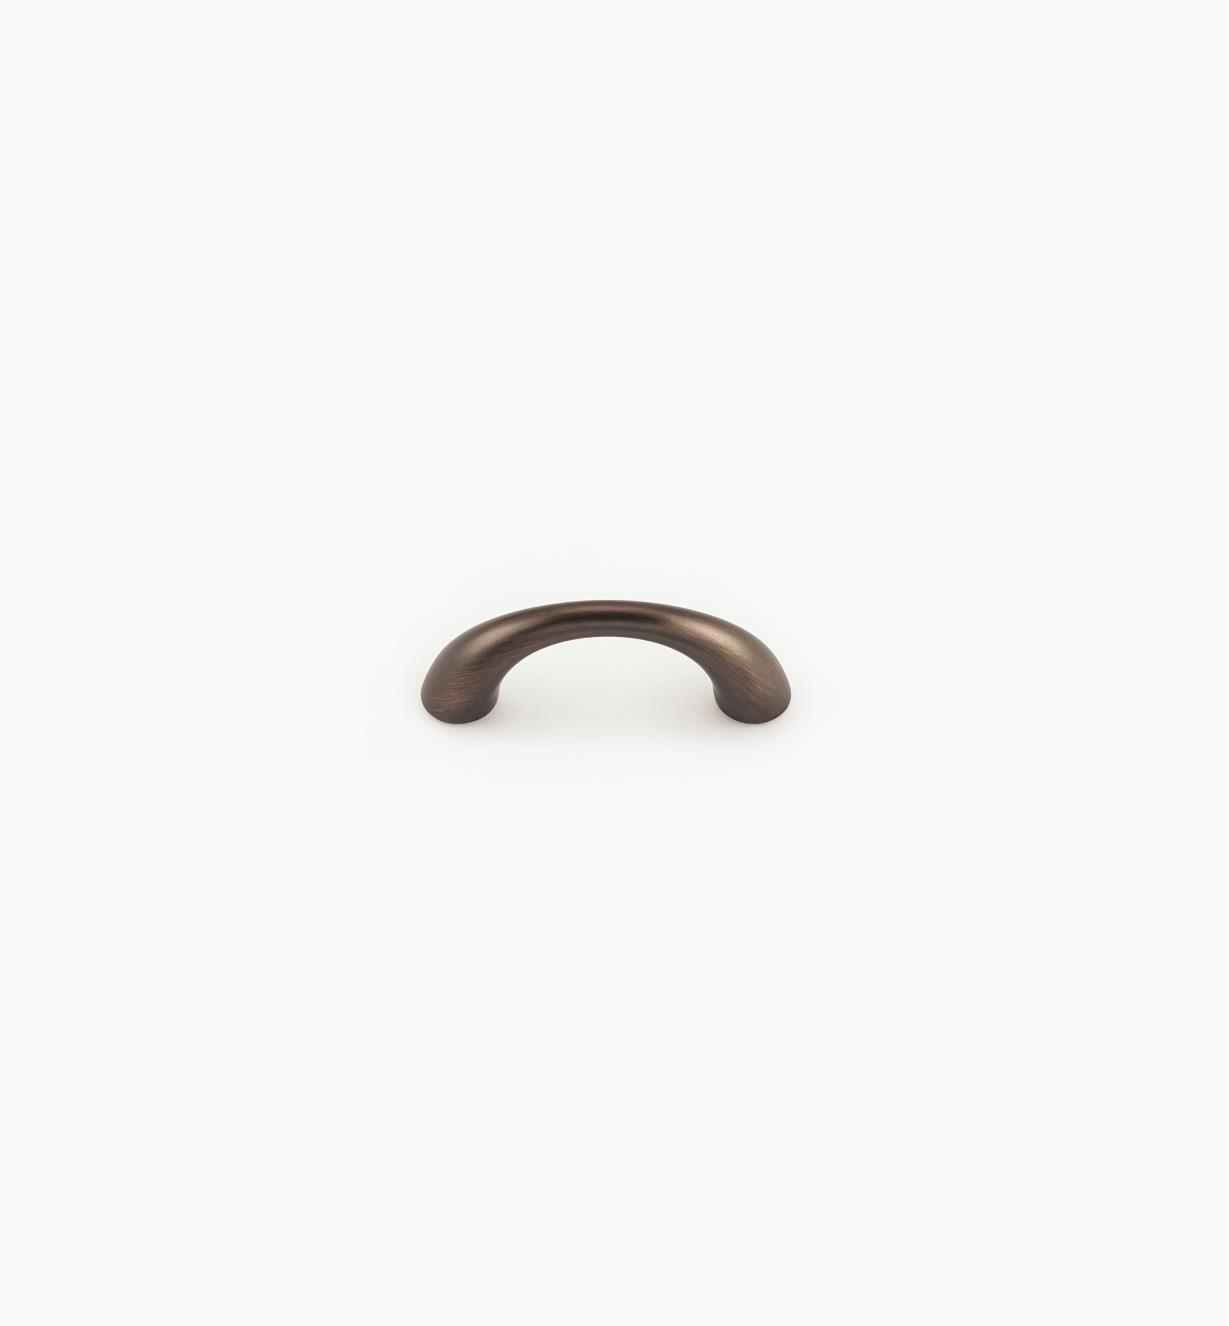 01W8380 - Poignée moderne ovale, fini vieux bronze, 1 5/8 po